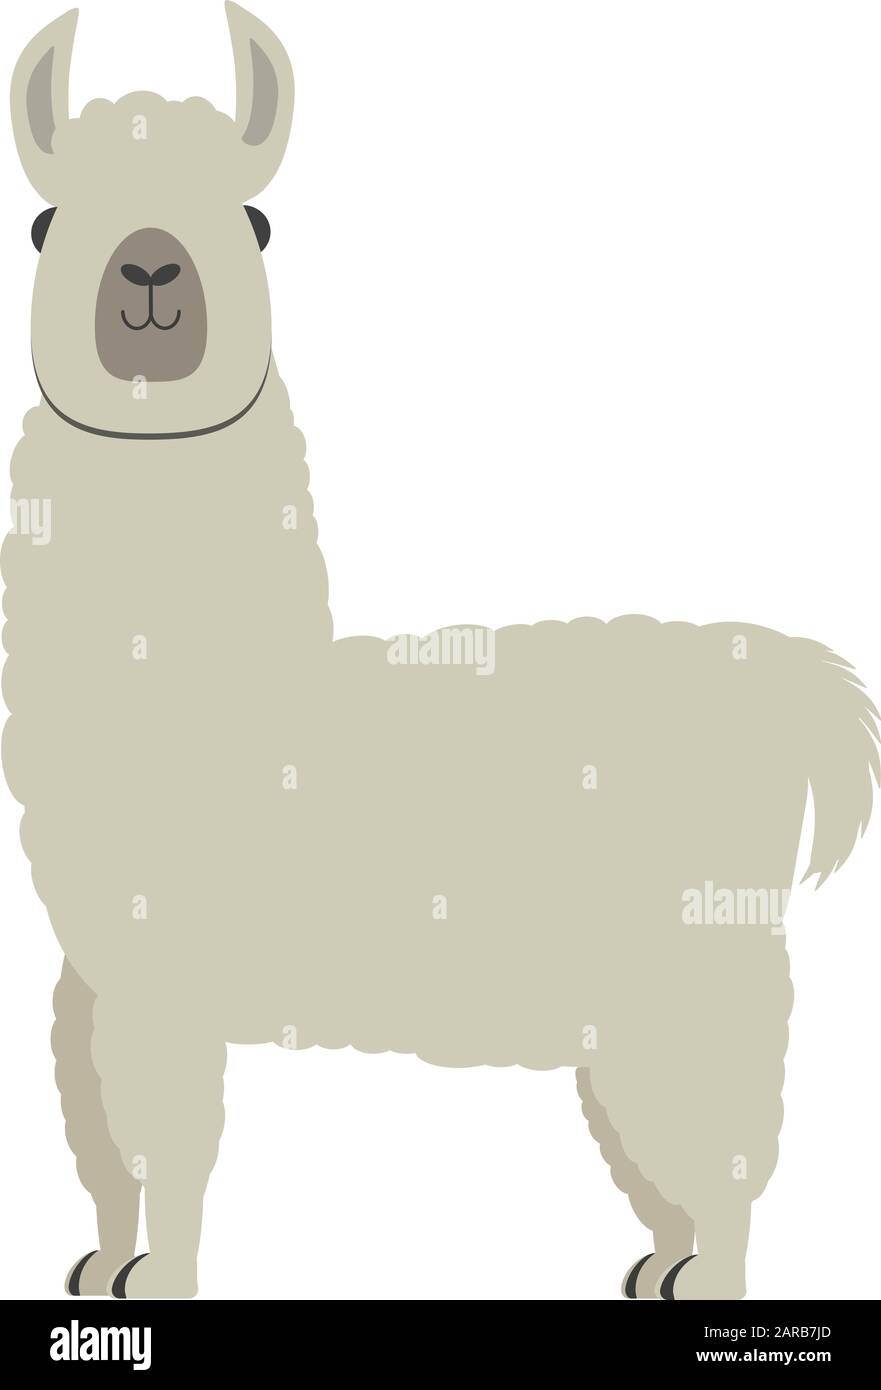 cute fluffy alpaca or llama isolated on white background vector illustration Stock Vector